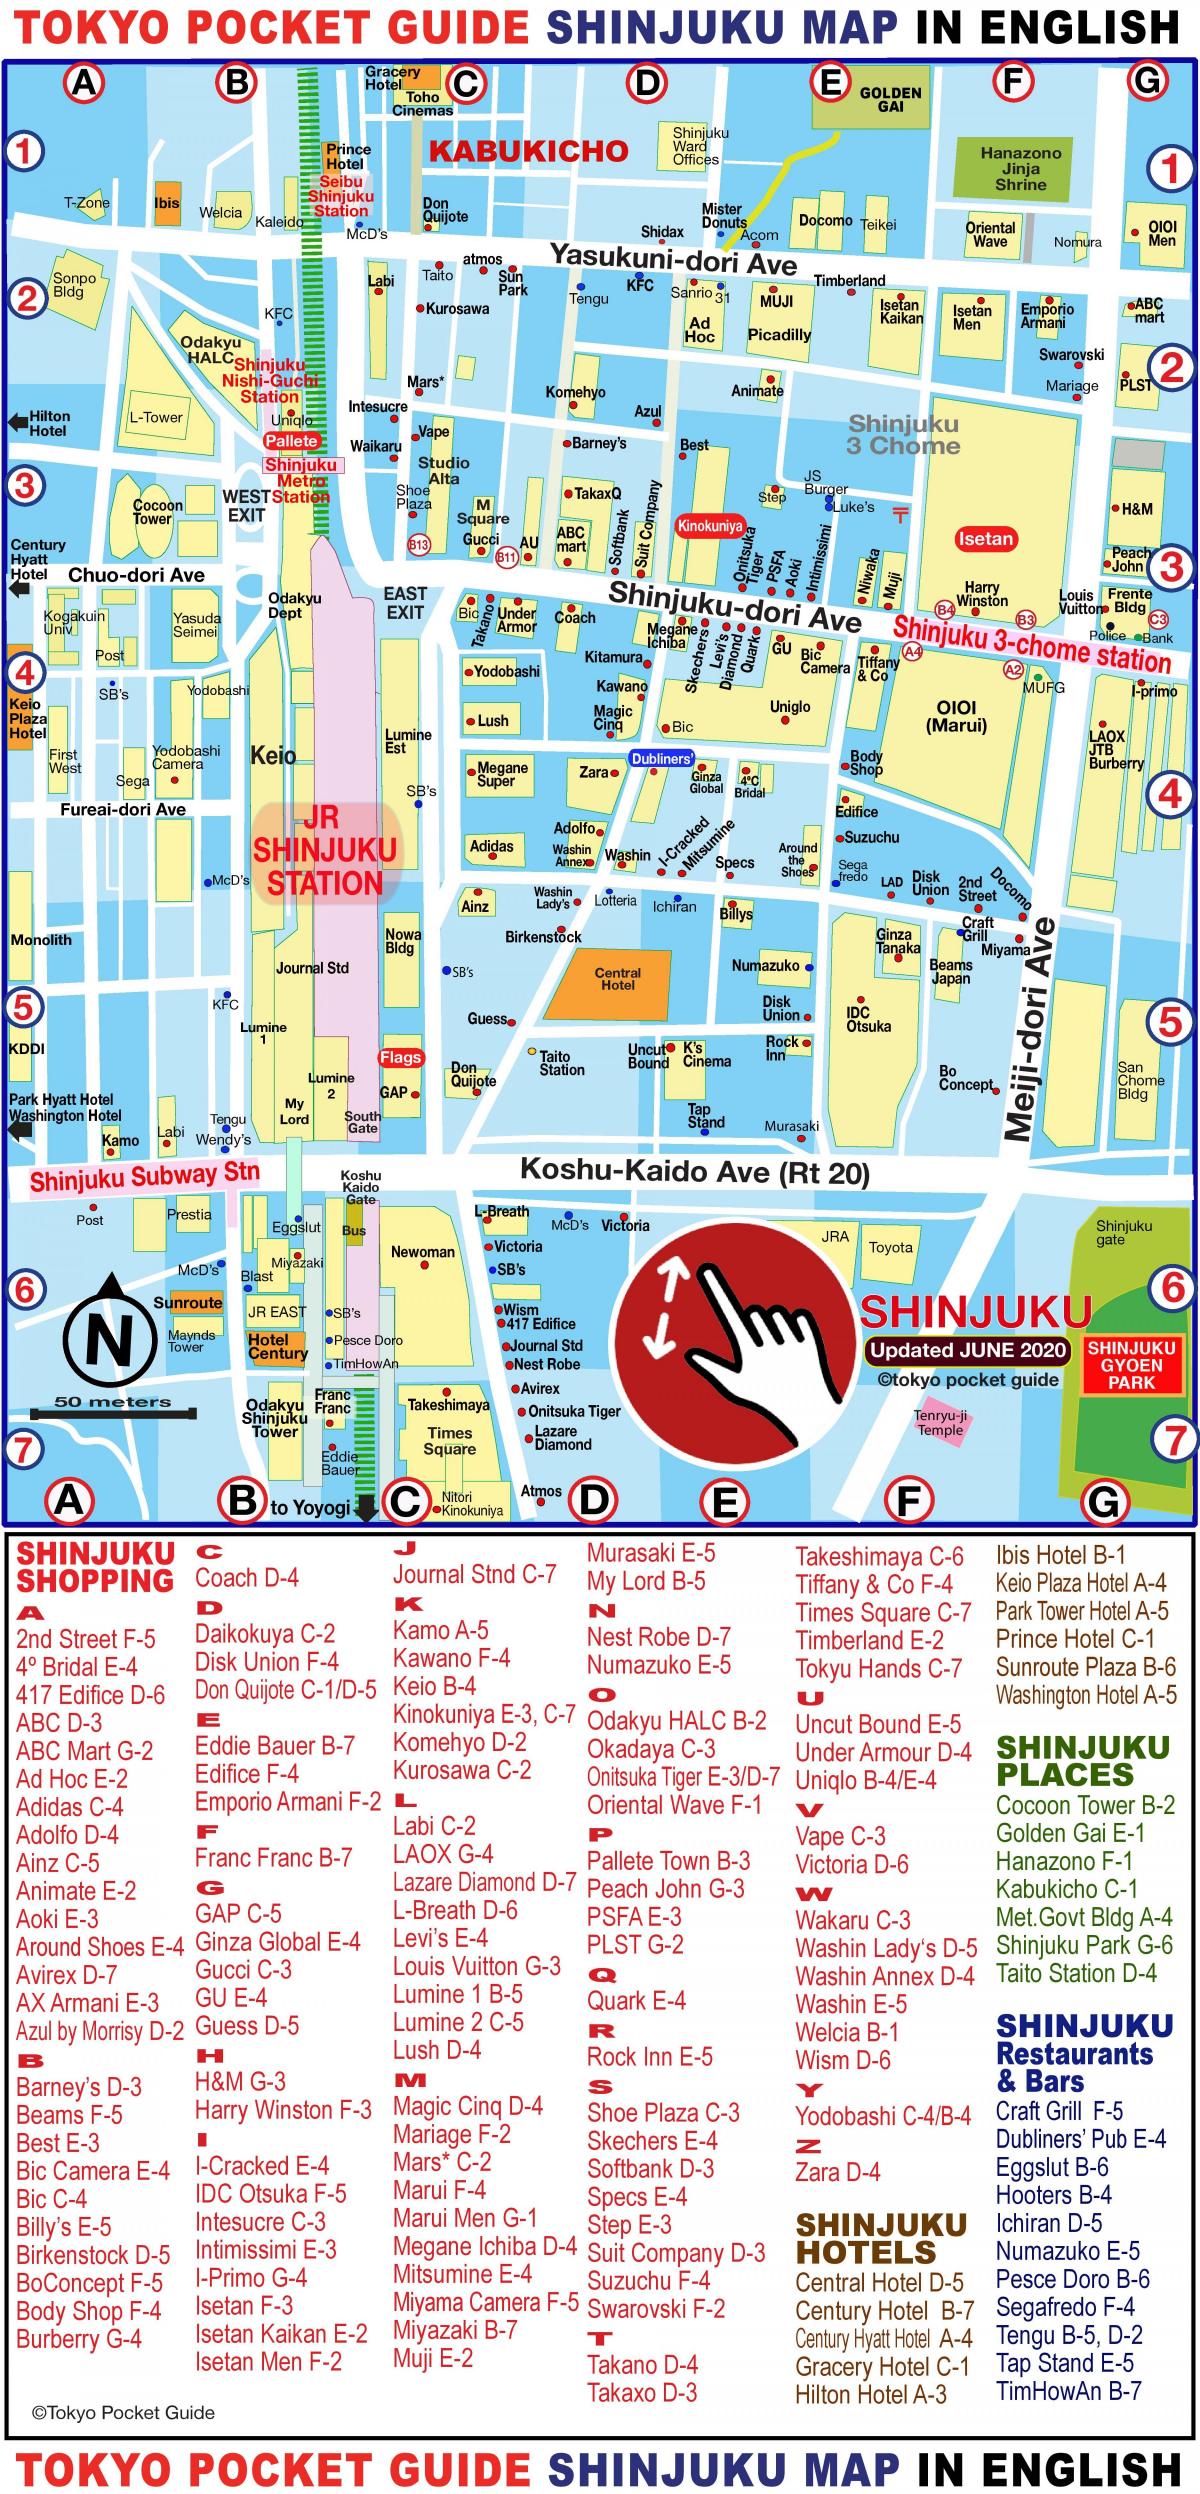 Shinjuku handlowych mapie